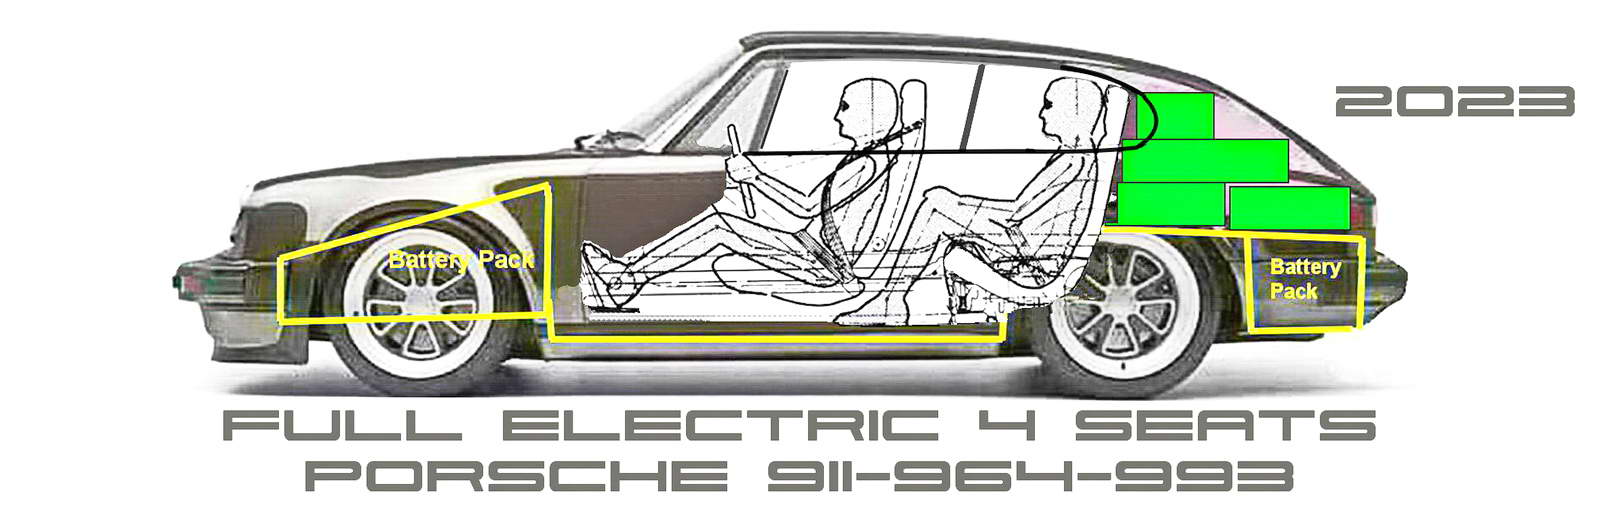 Porsche 911-964-993 Sportback Full Electric side Banner